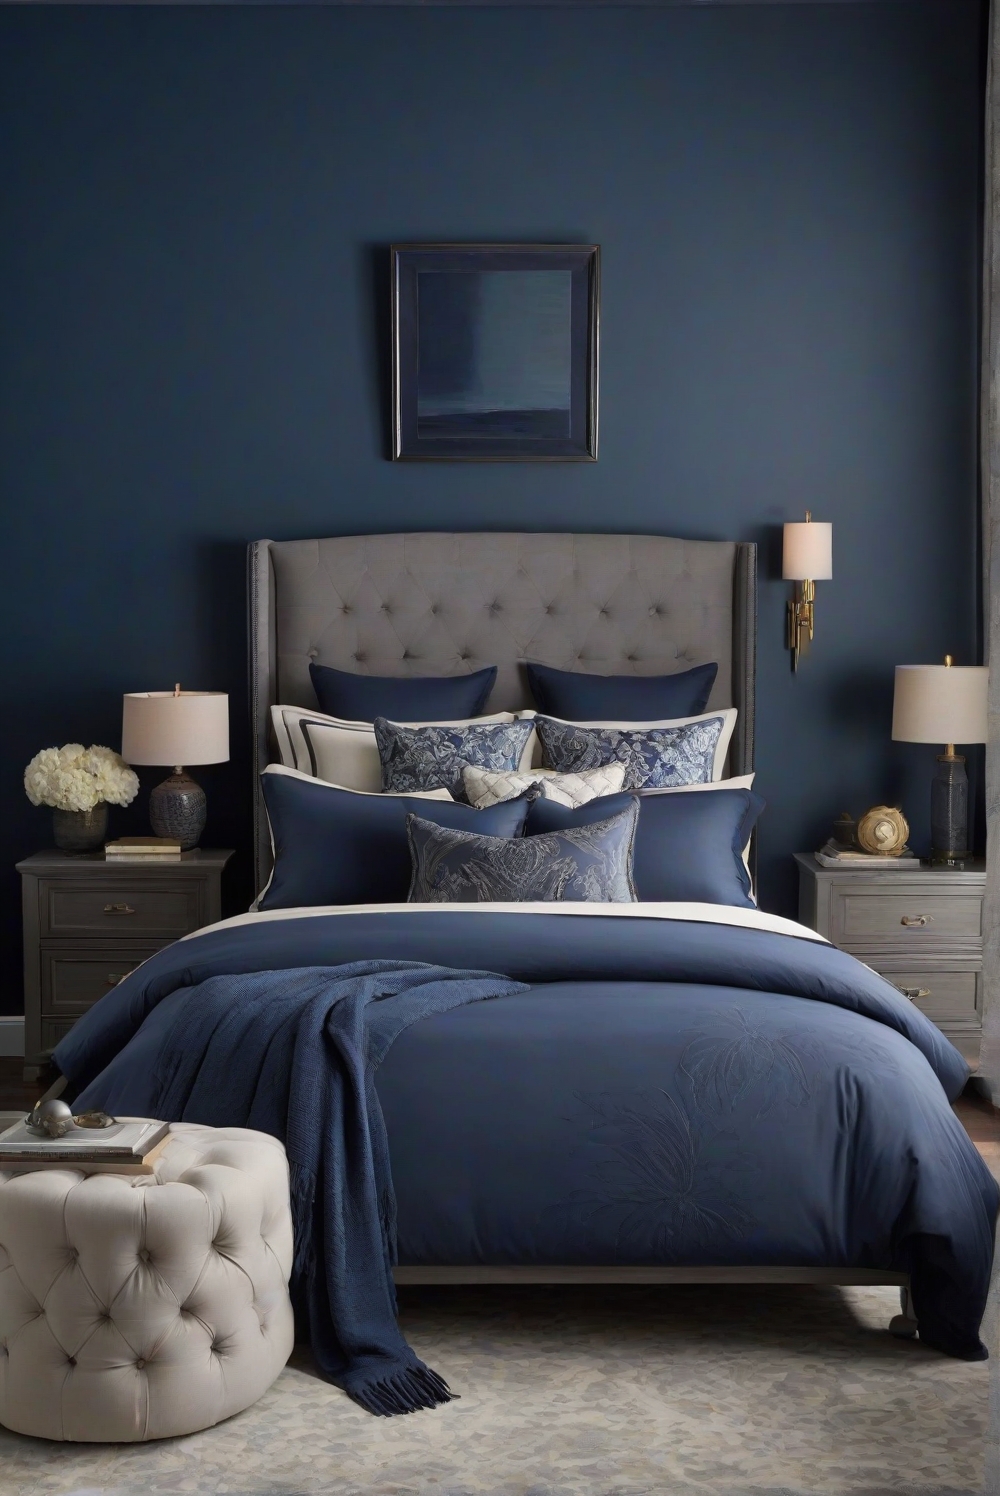 marine blue paint color, moody bedroom decor, interior design ideas, bedroom decorating tips, home decor inspiration, wall color ideas, room design inspiration